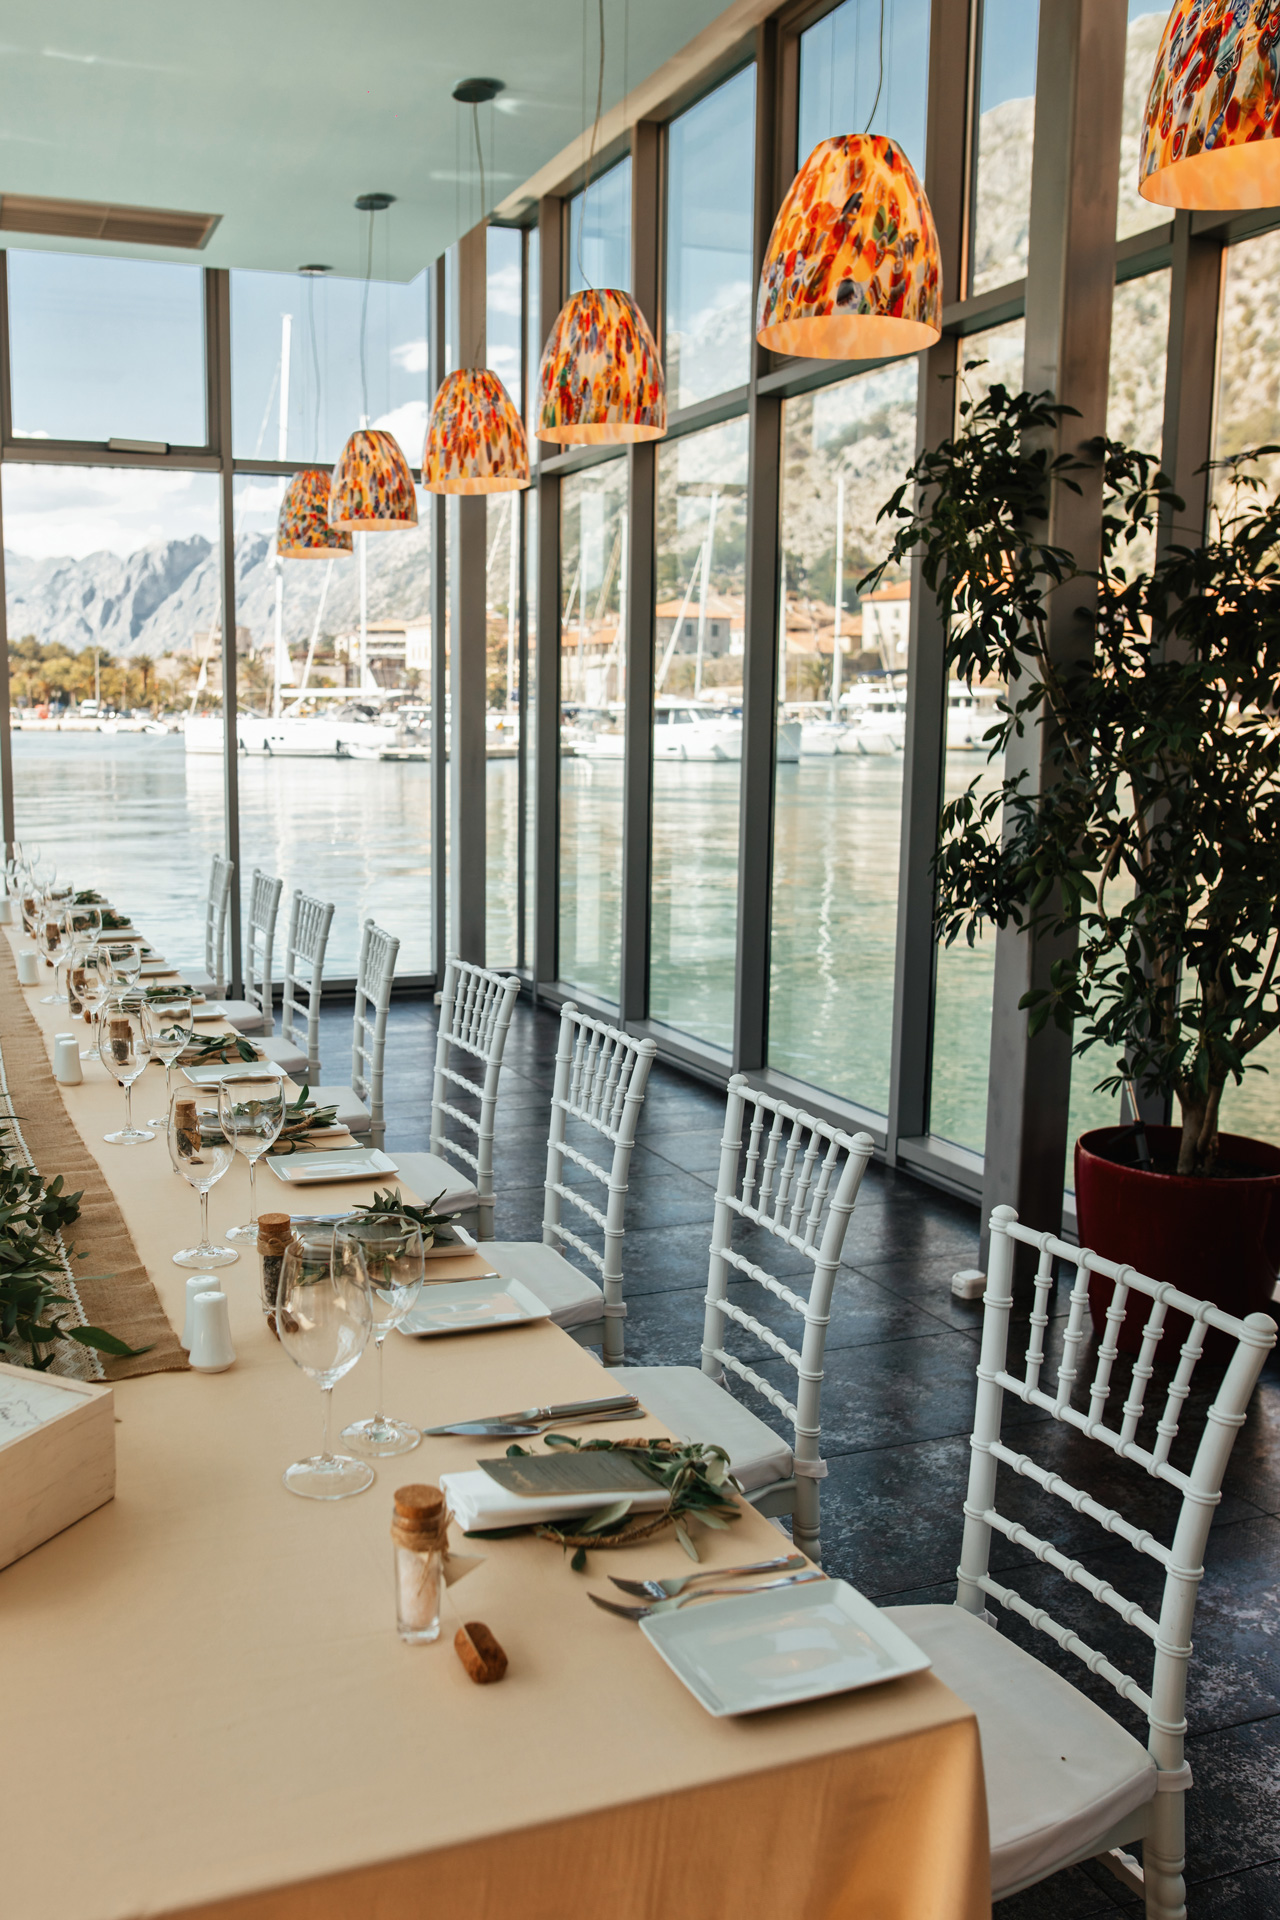 decorated wedding reception venue with view sea through windows